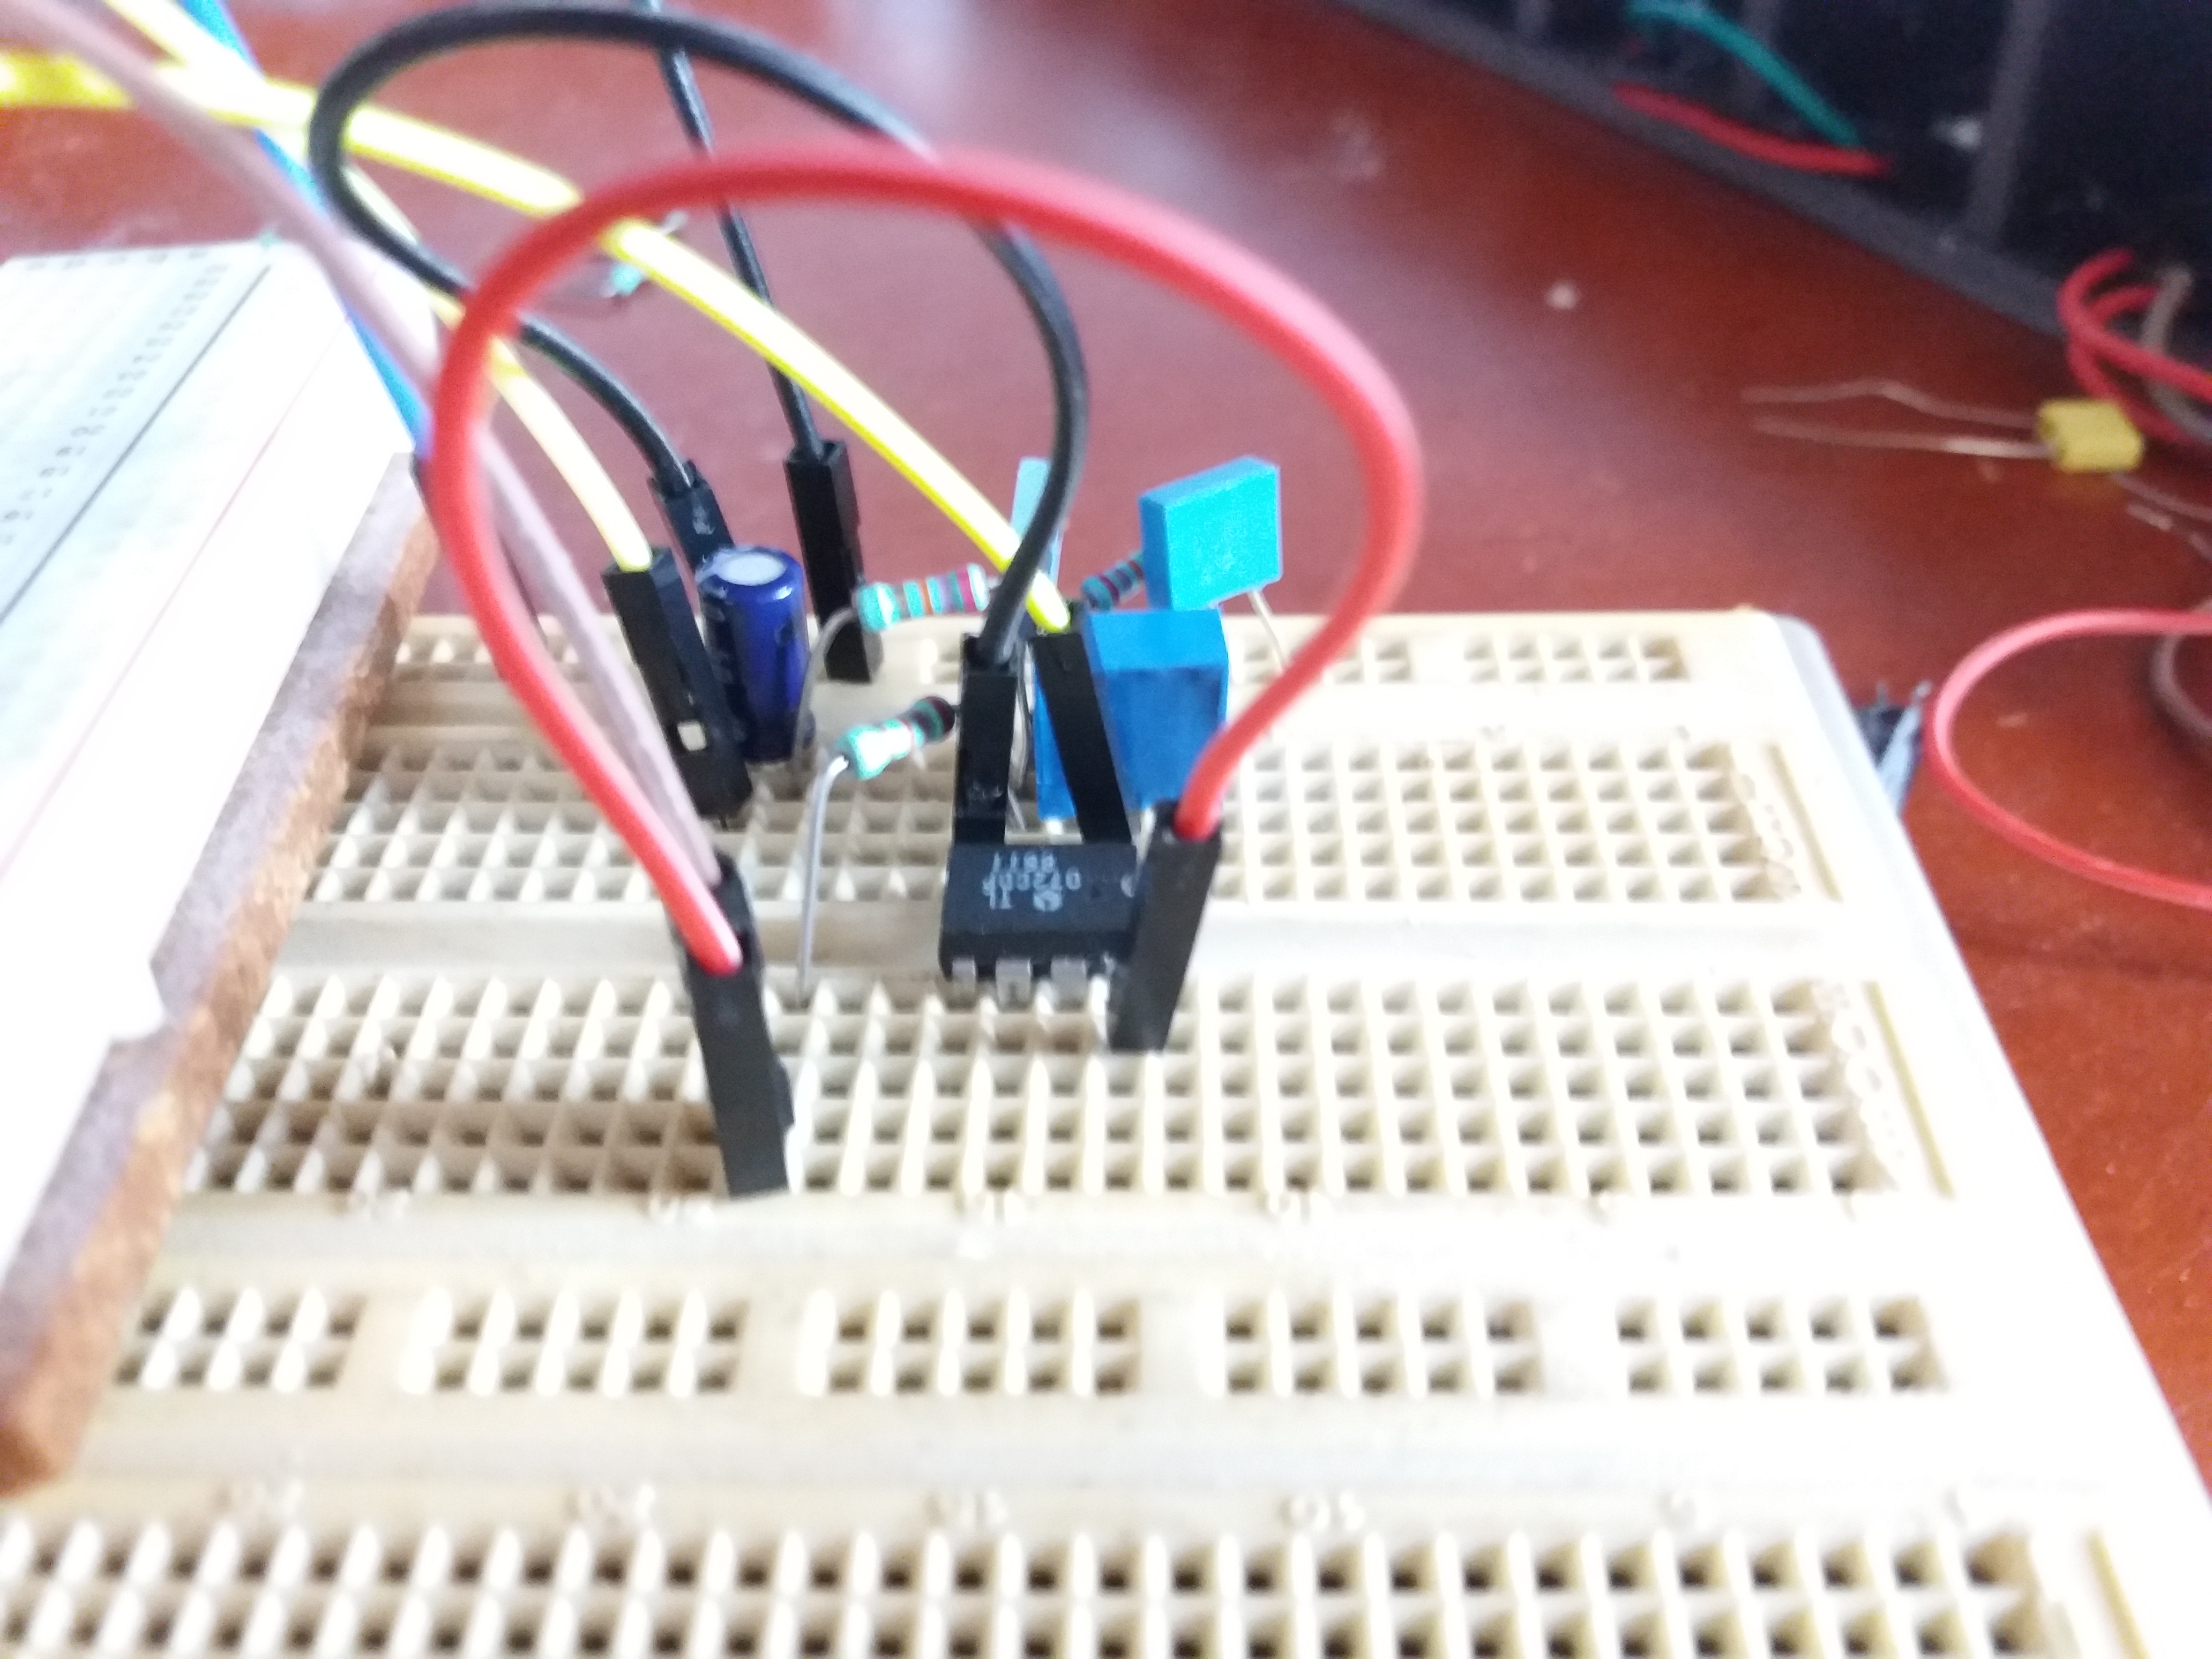 led light table arduino